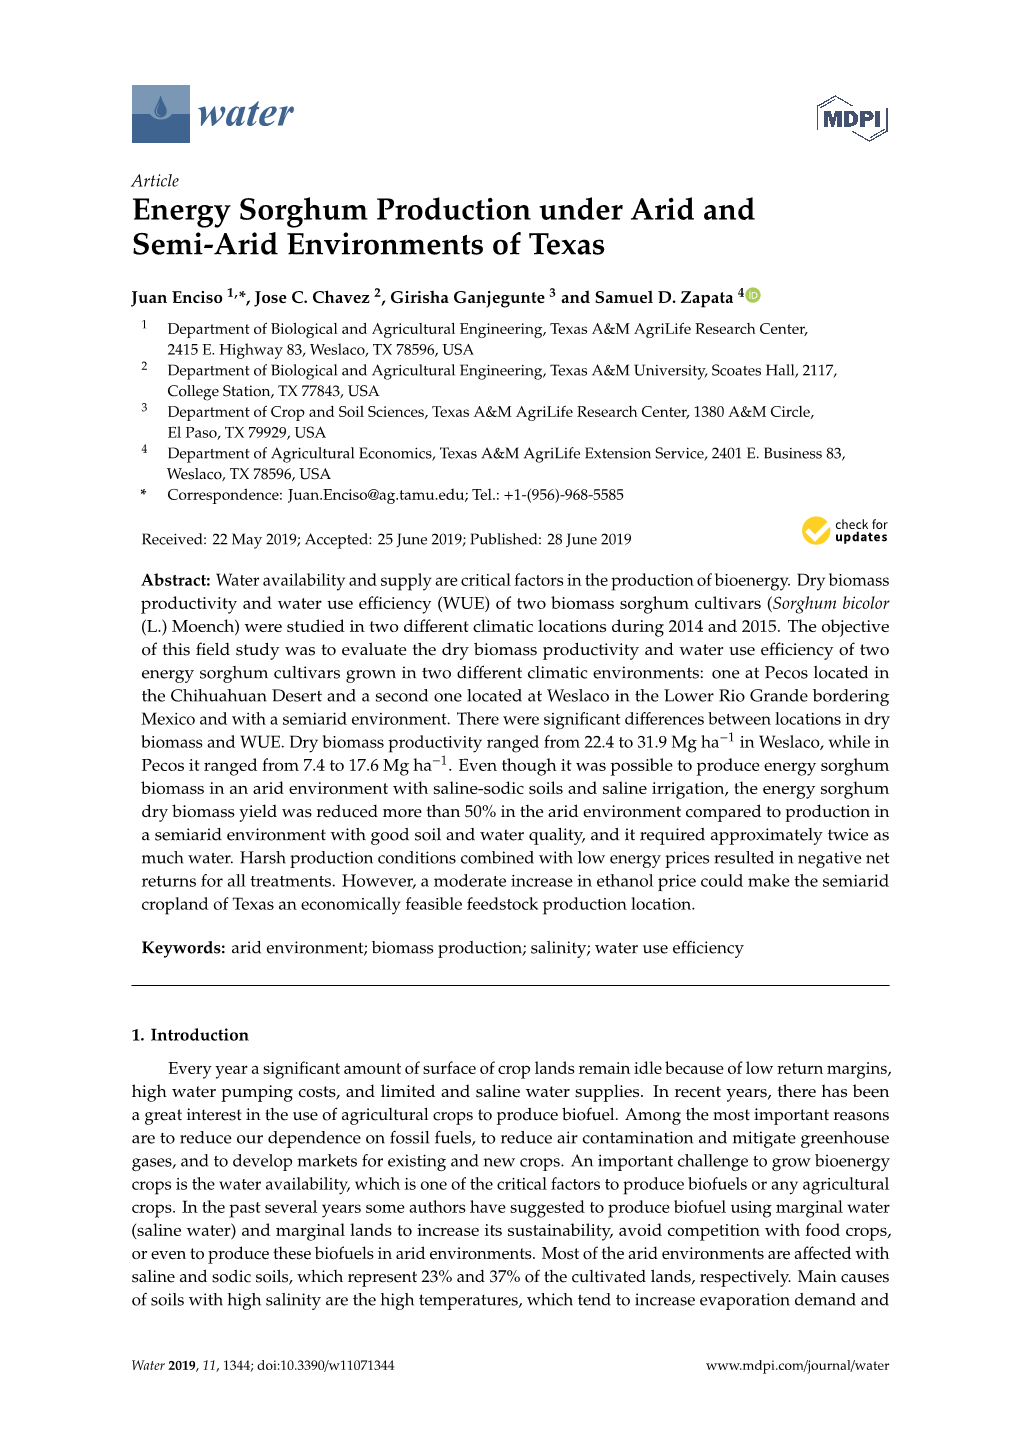 Energy Sorghum Production Under Arid and Semi-Arid Environments of Texas